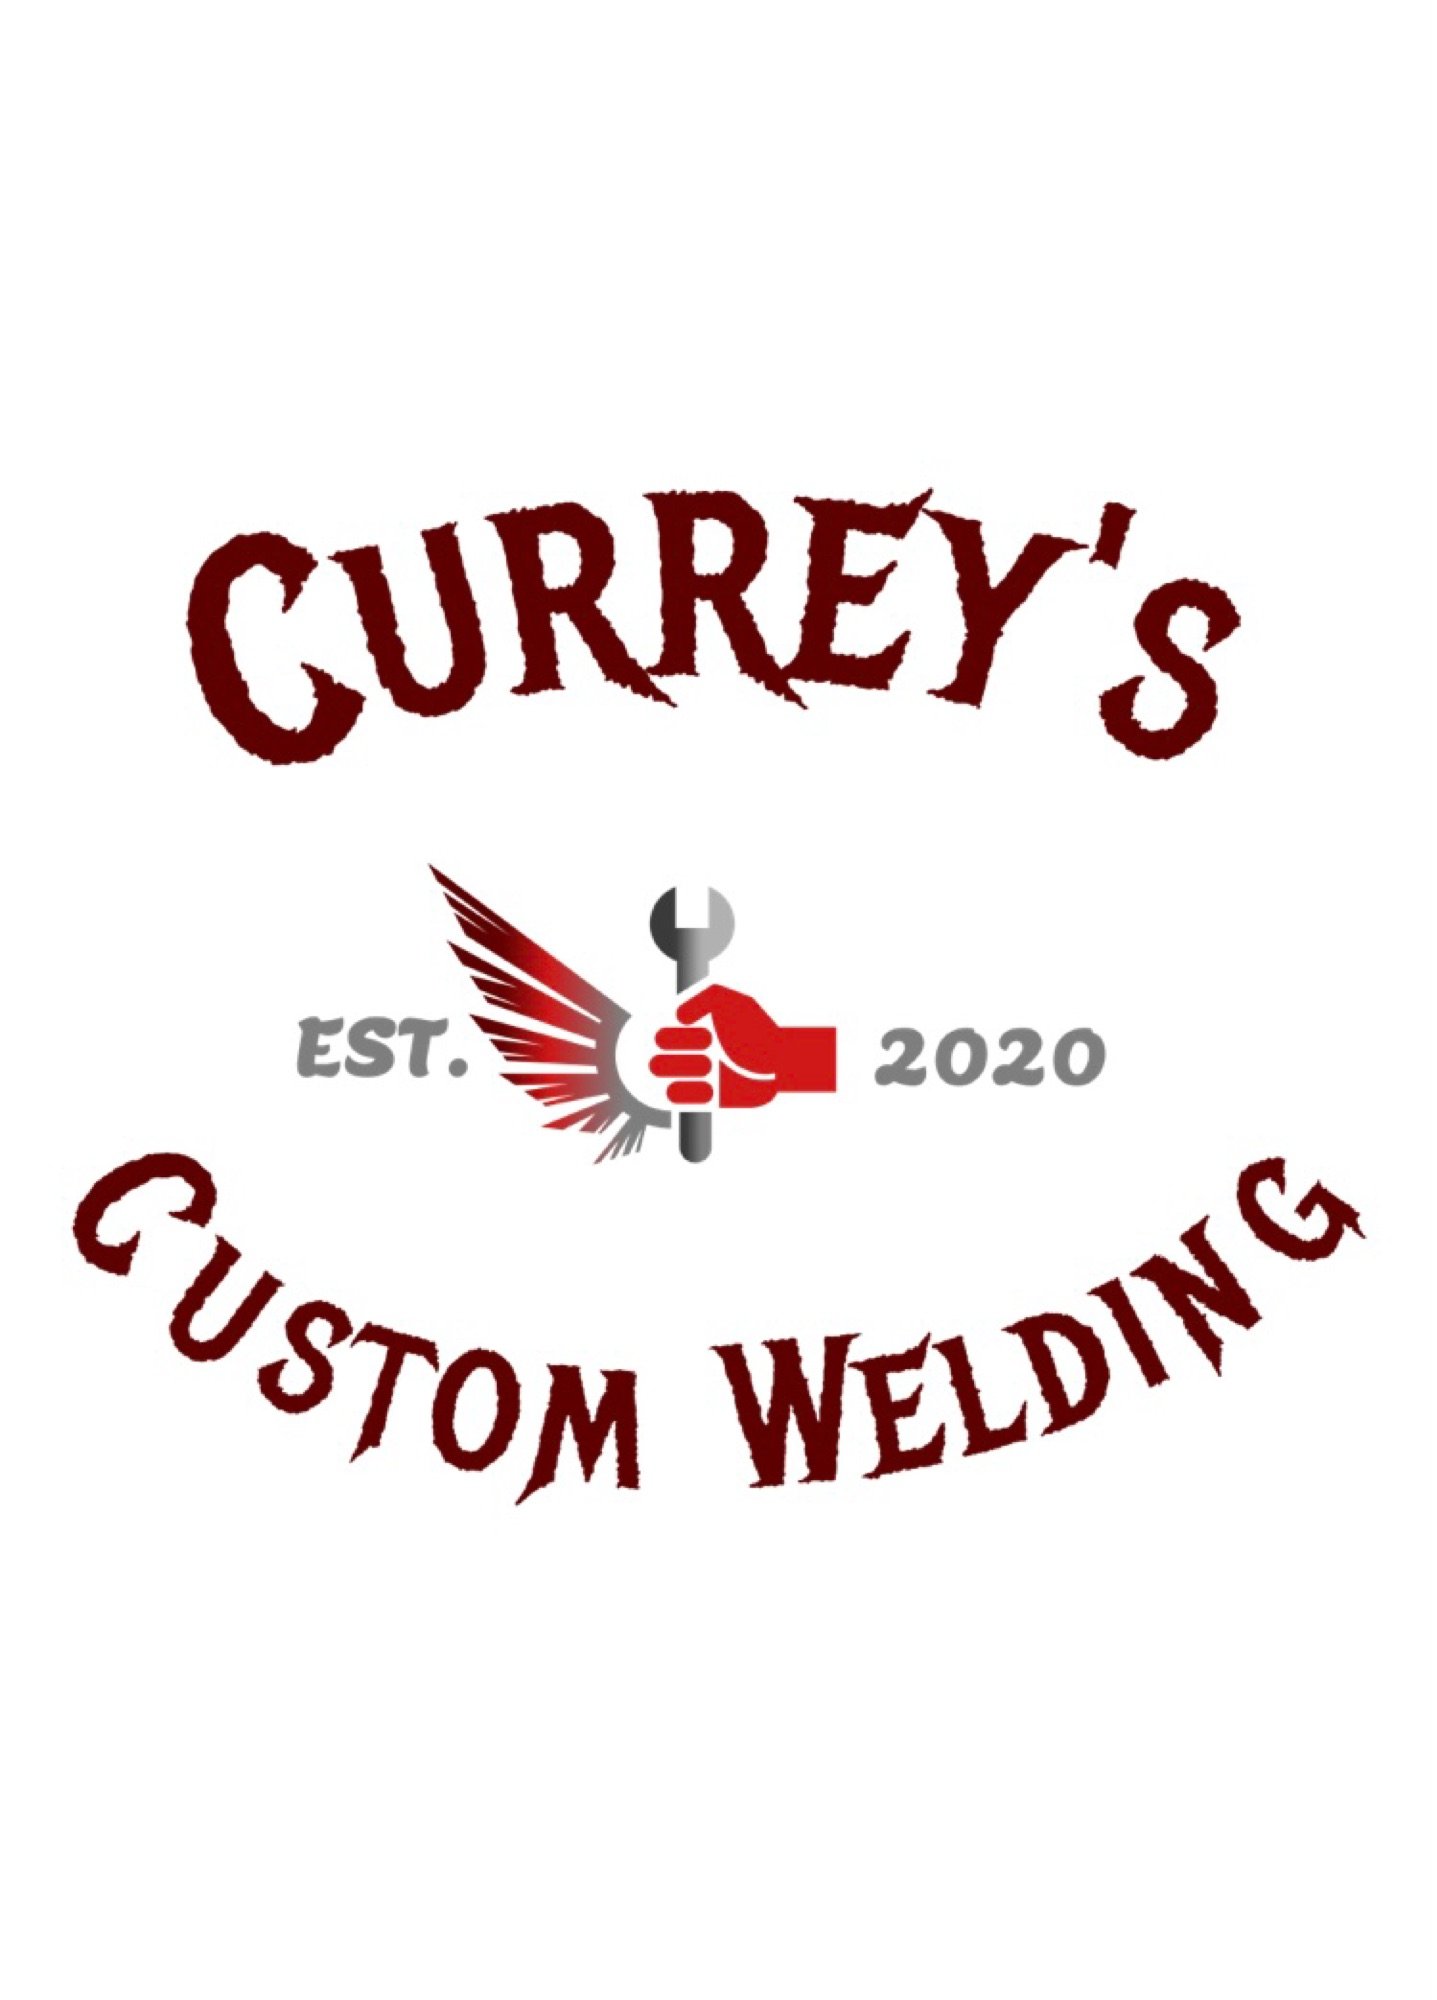 Currey's Custom Welding LLC Logo